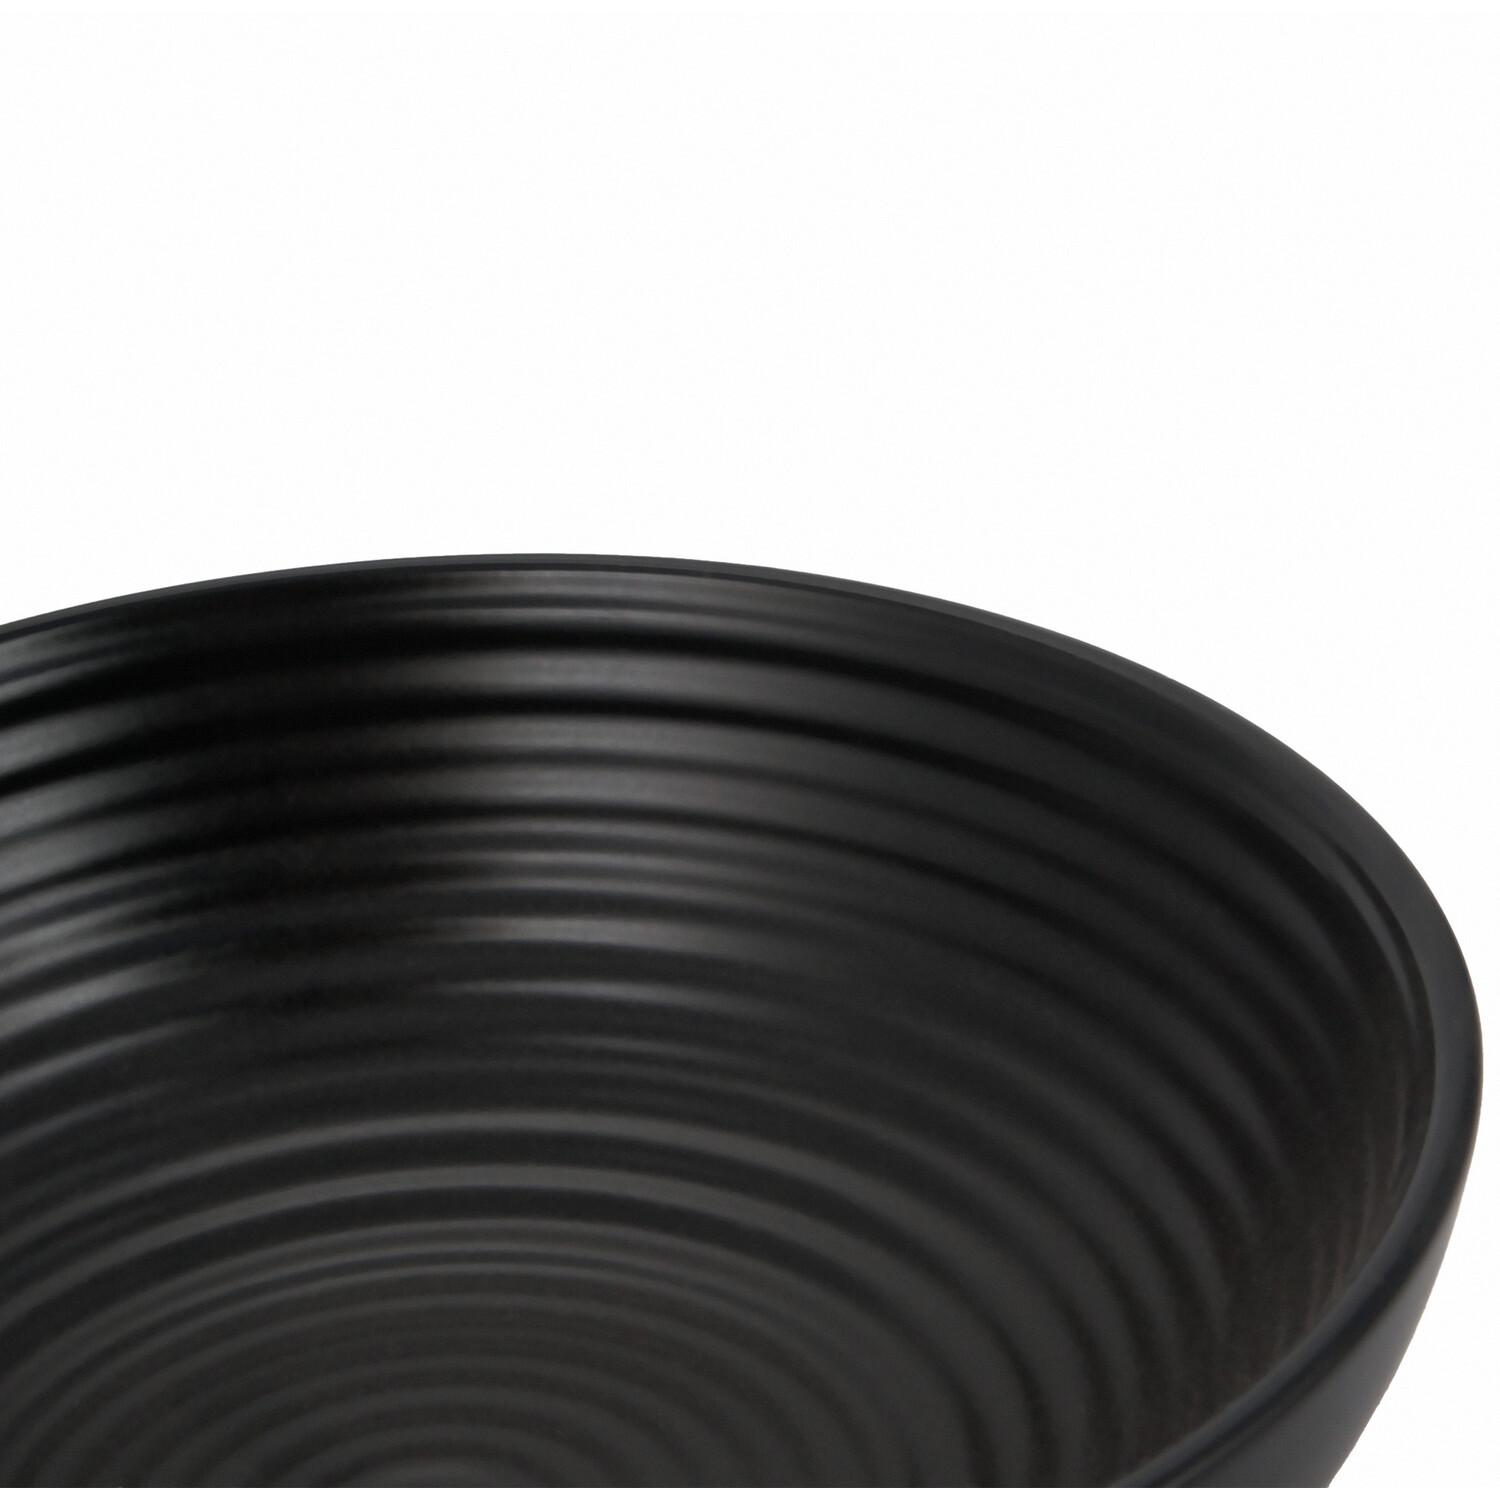 Nera Ribbed Pasta Bowl - Black Image 2